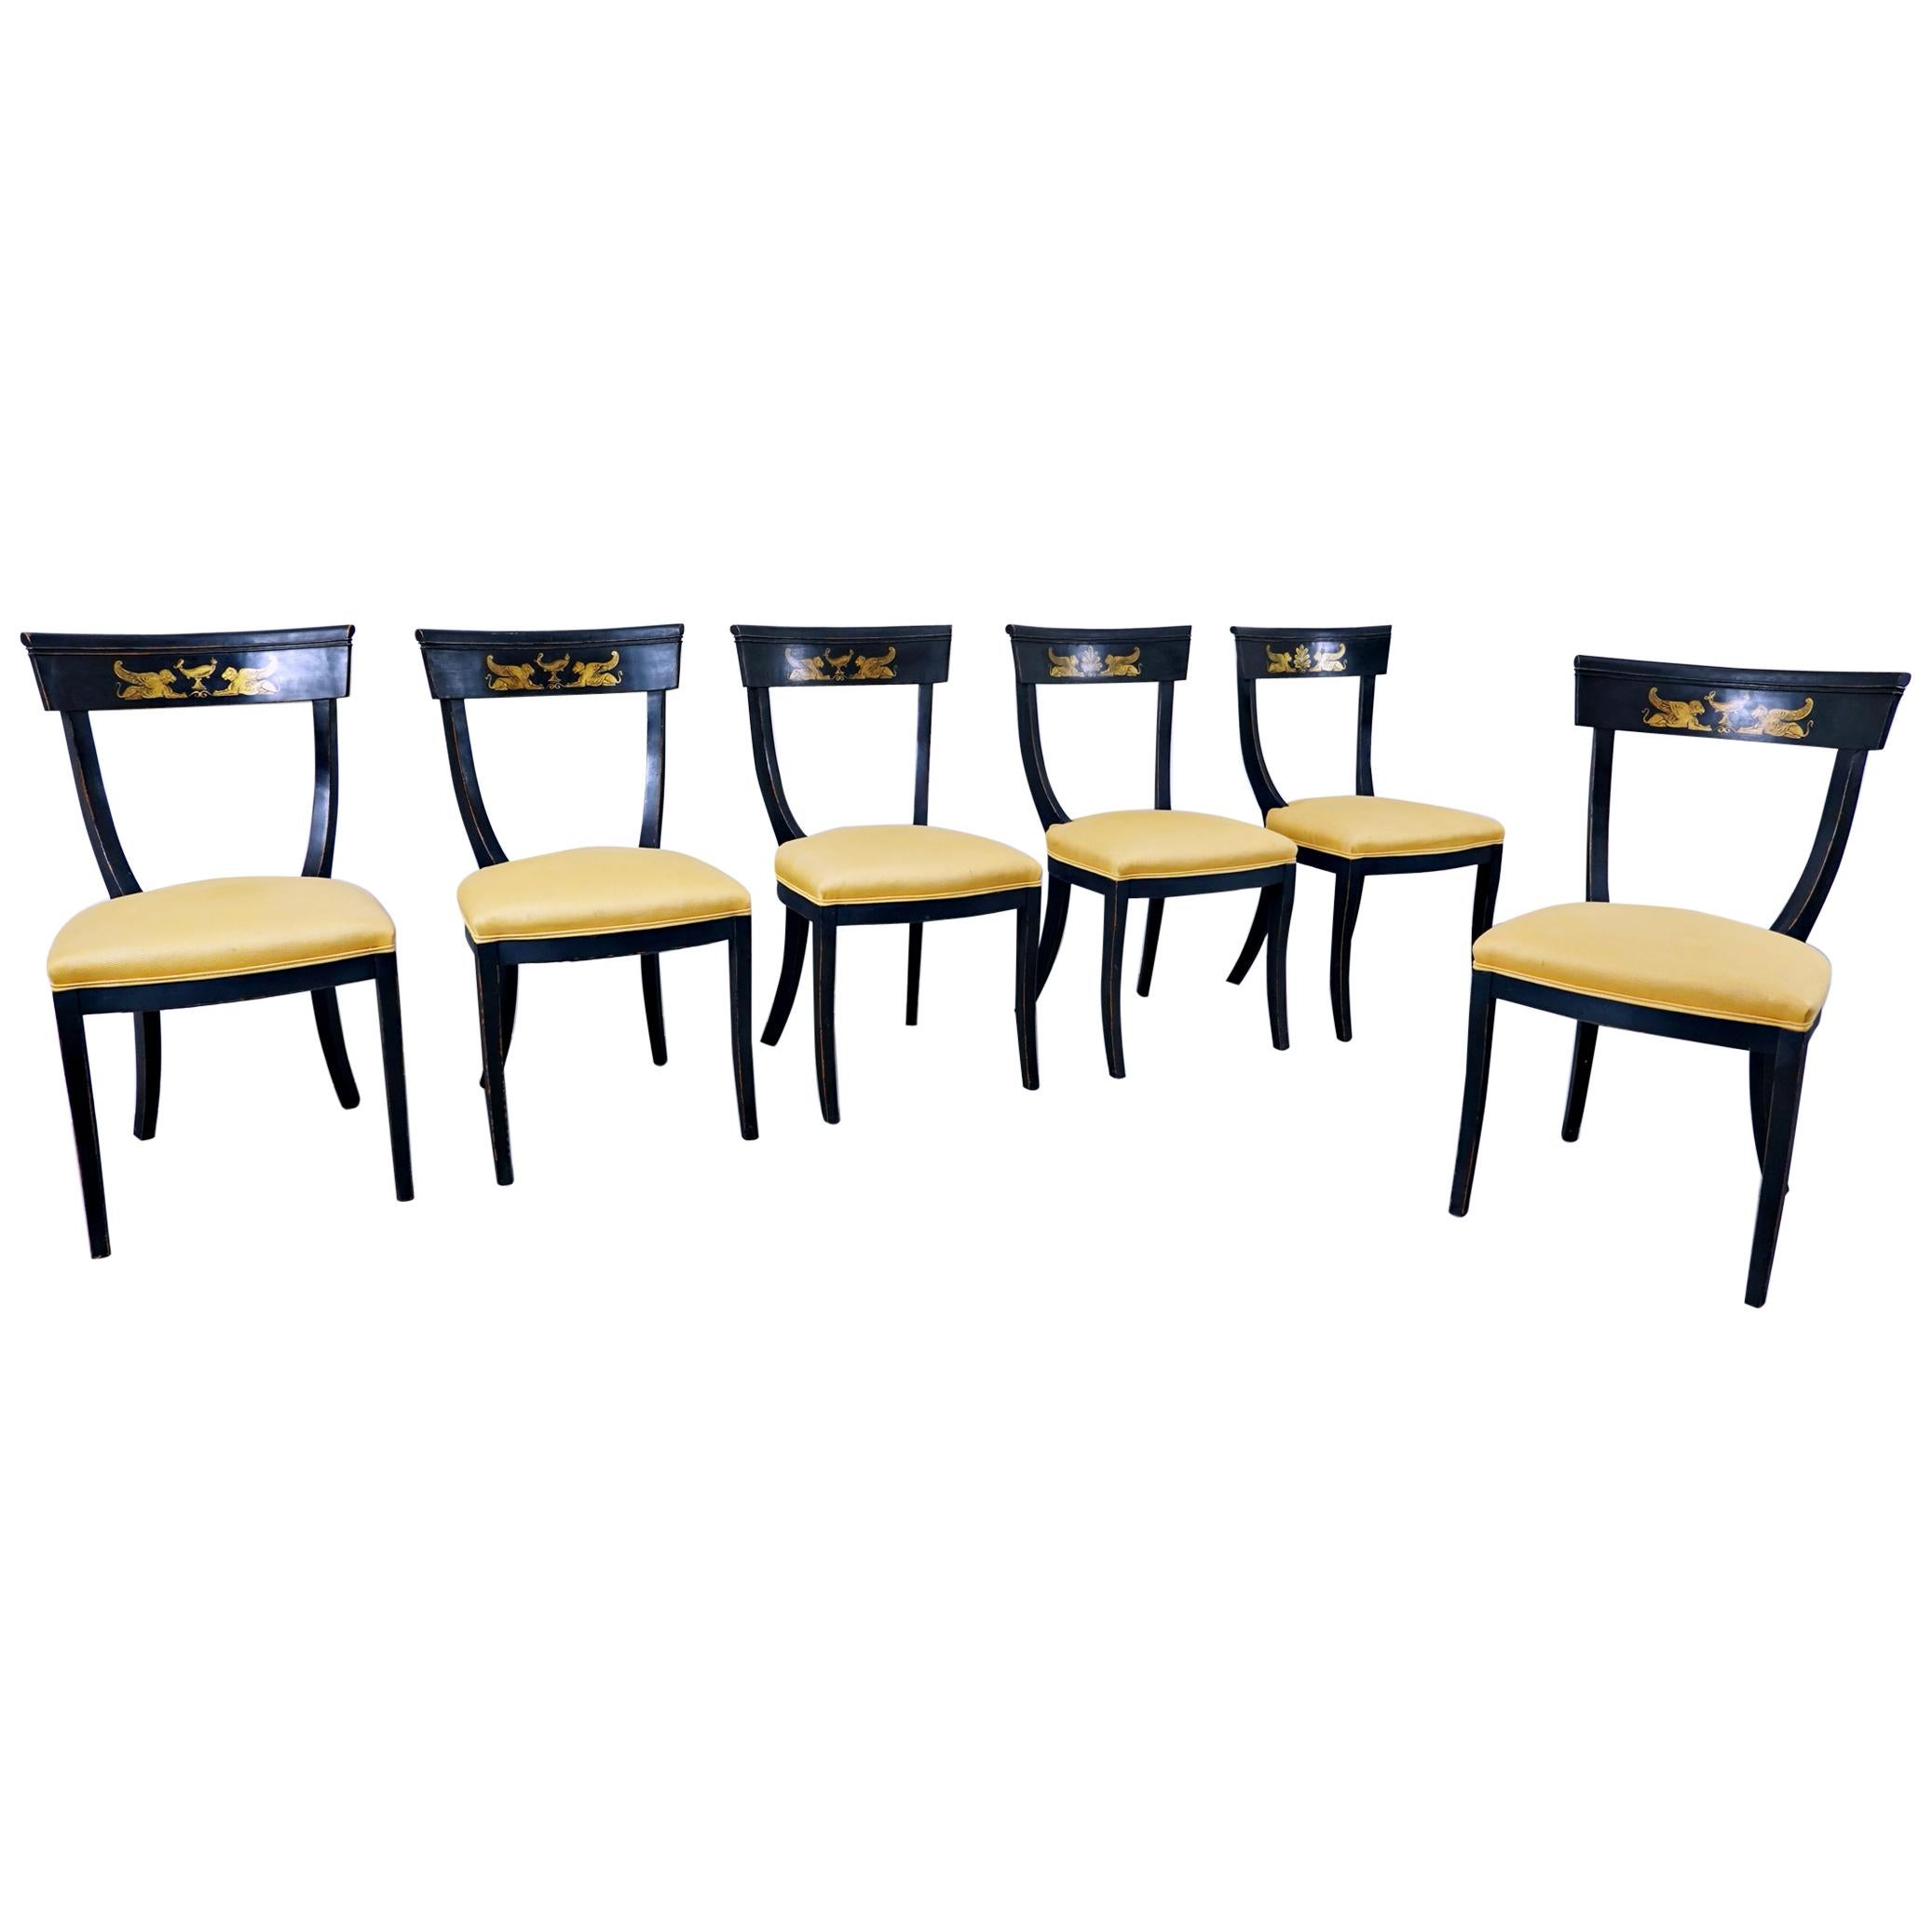 Set of 6 Chairs, Empire Style, Belgium